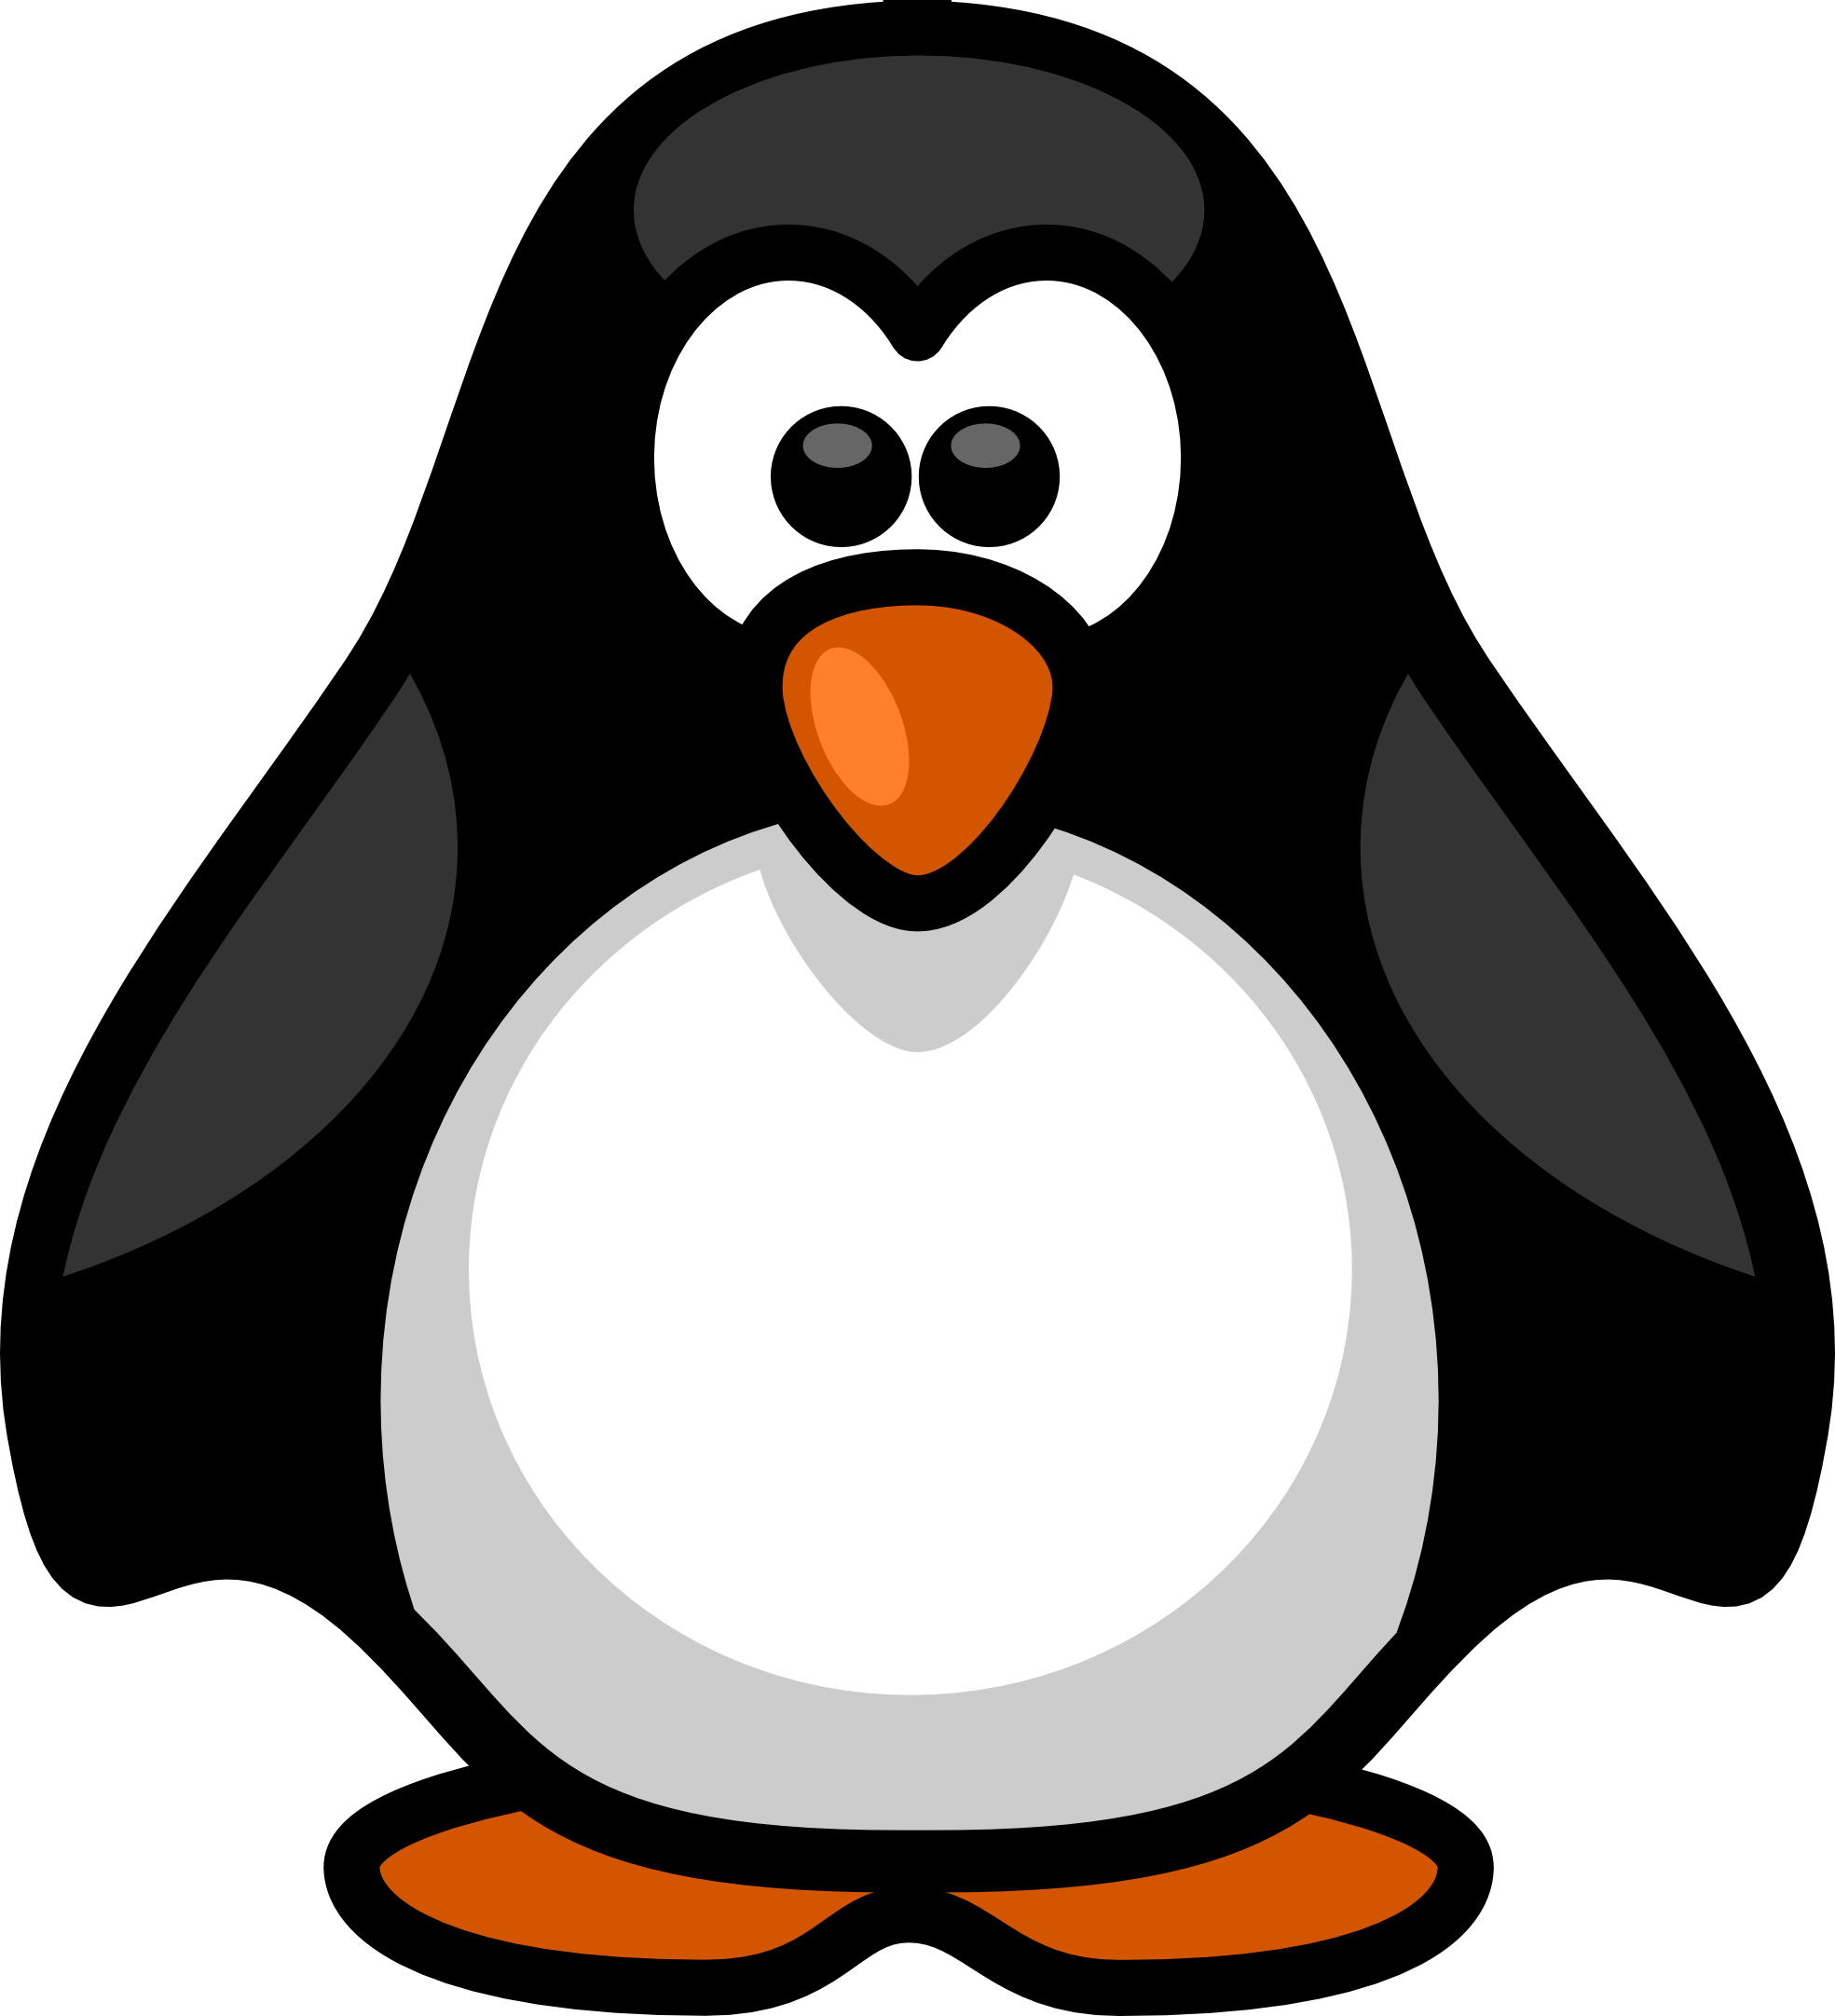 Penguins Clip Art - Clipart library